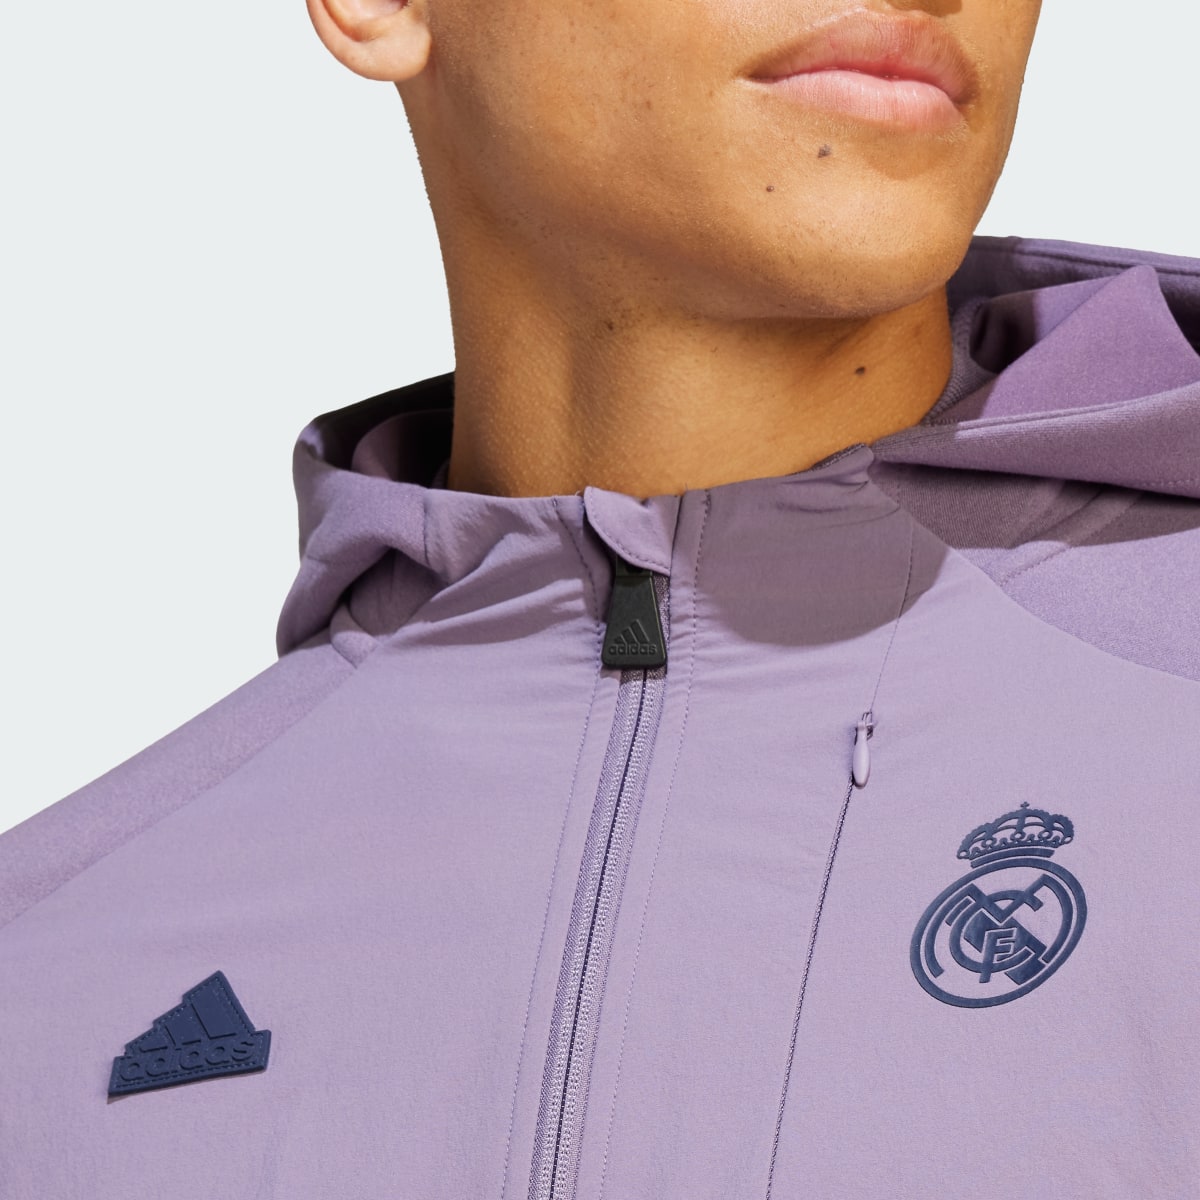 Adidas Veste à capuche entièrement Real Madrid Designed for Gameday. 6